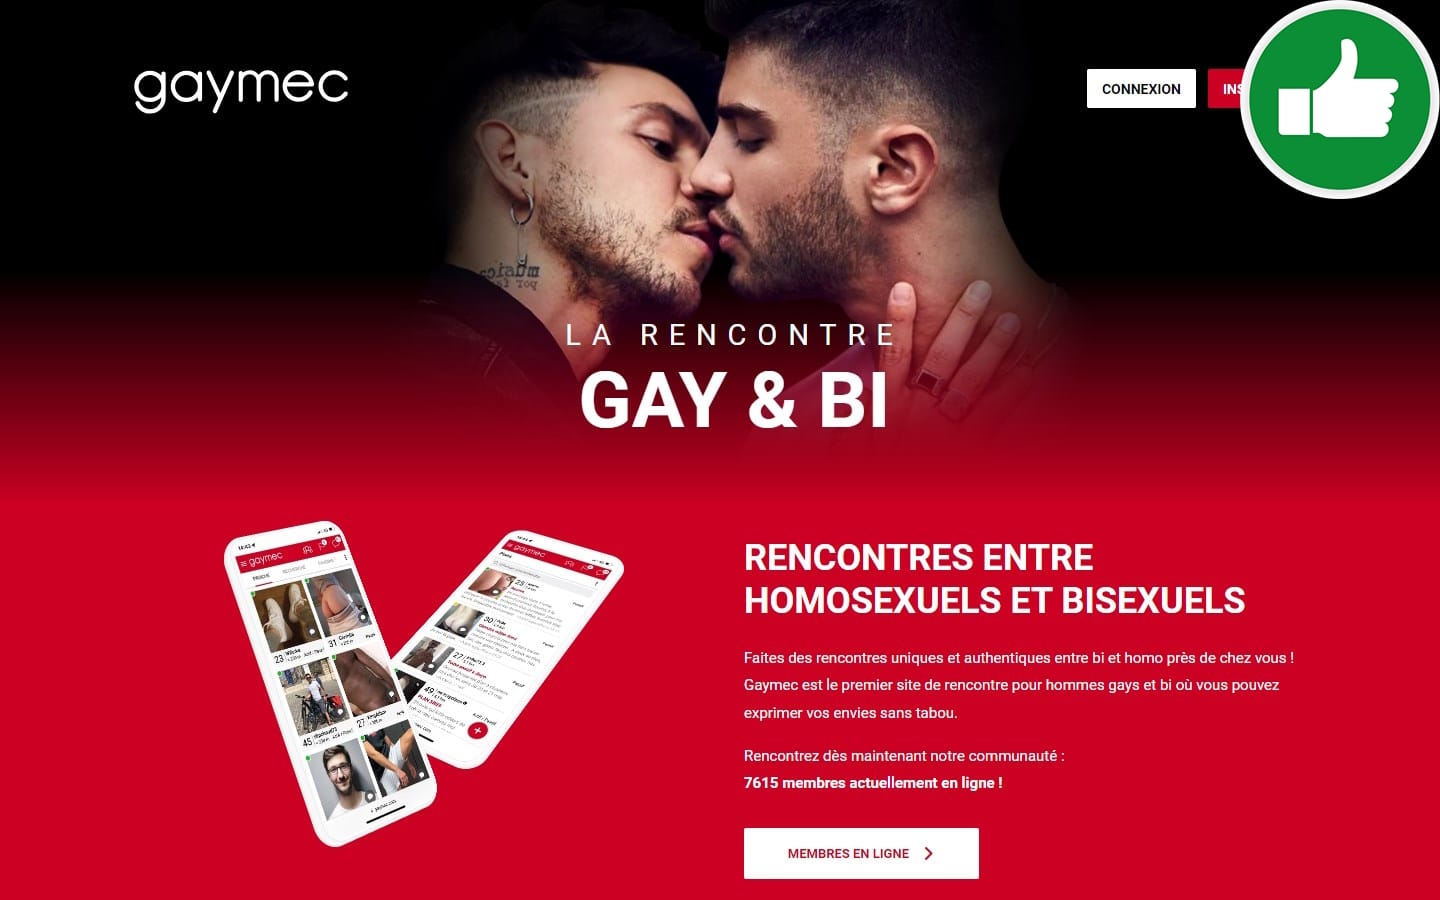 GayMec.com